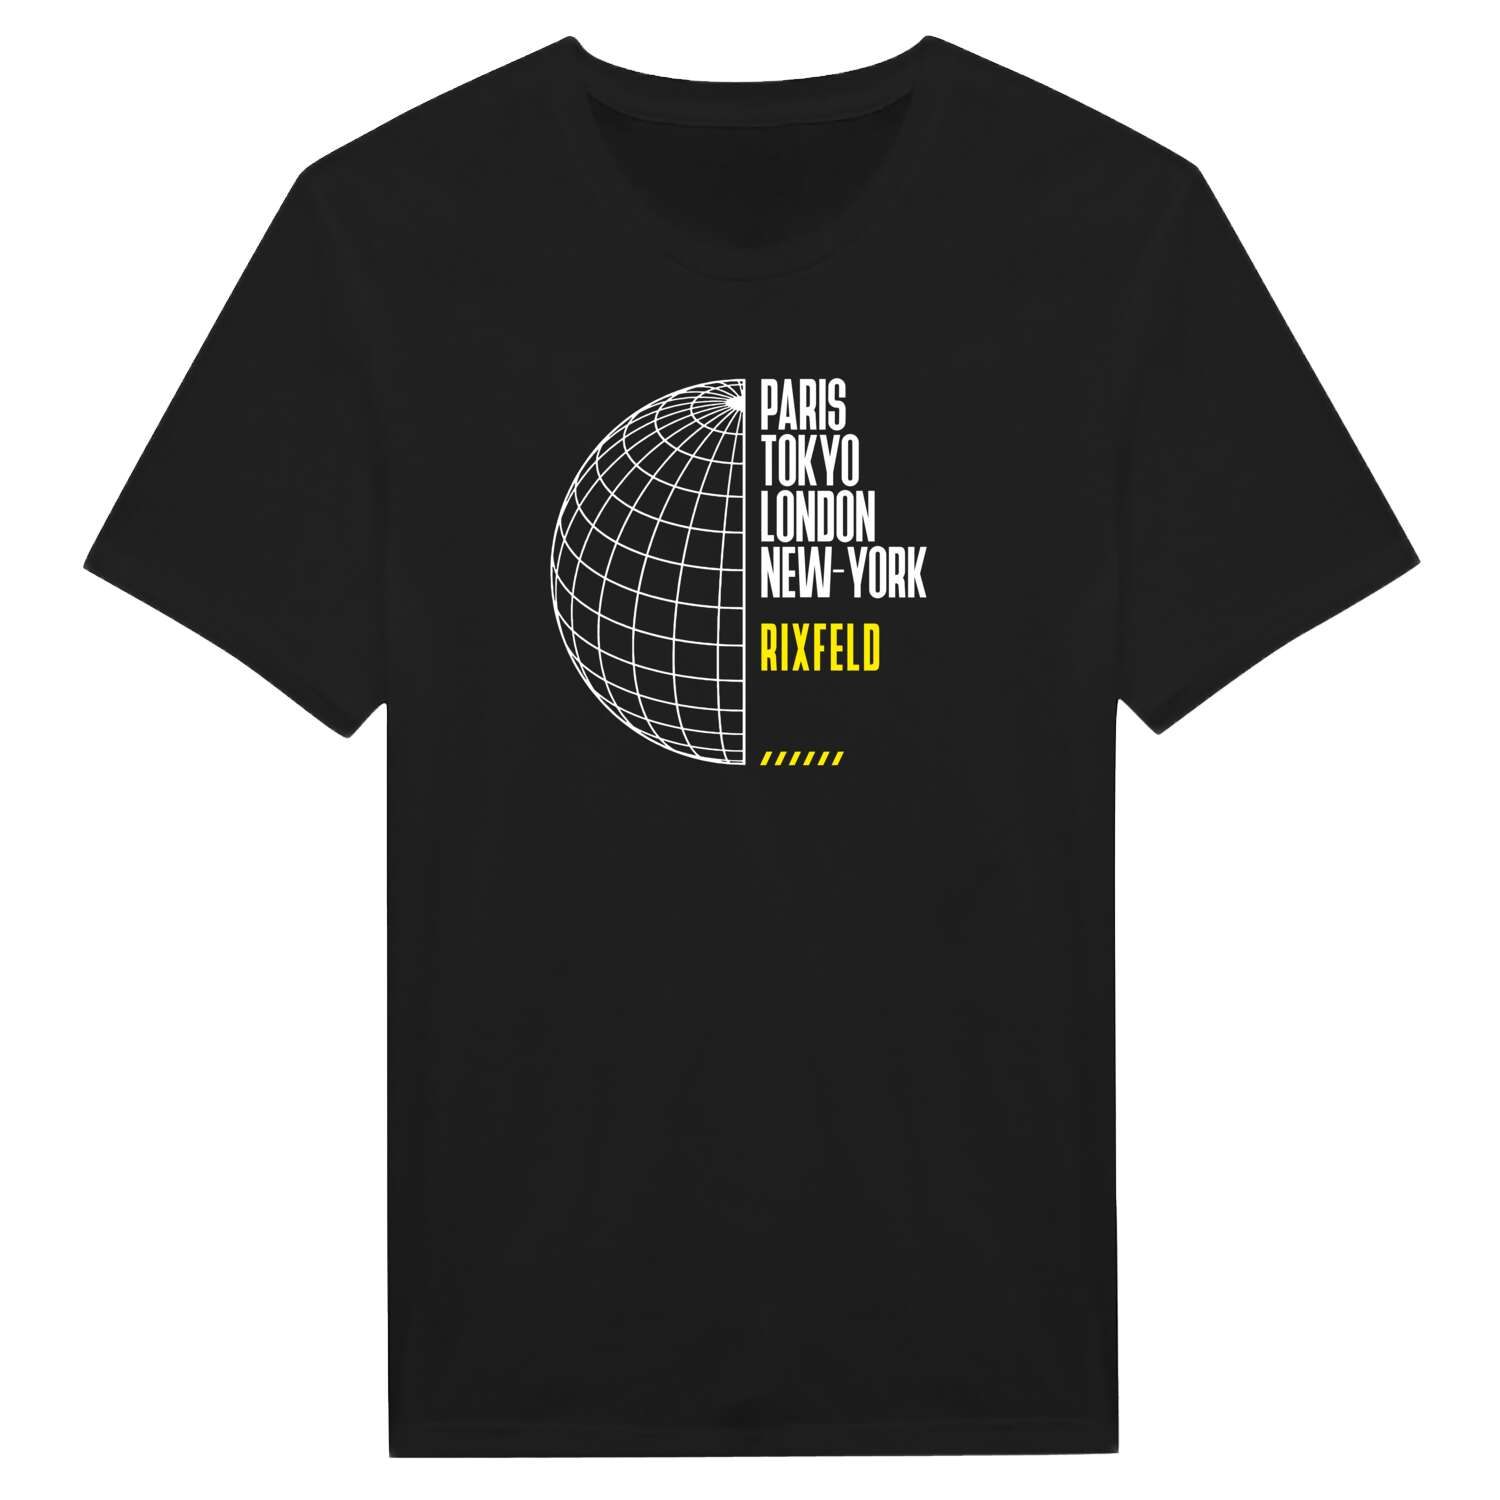 Rixfeld T-Shirt »Paris Tokyo London«